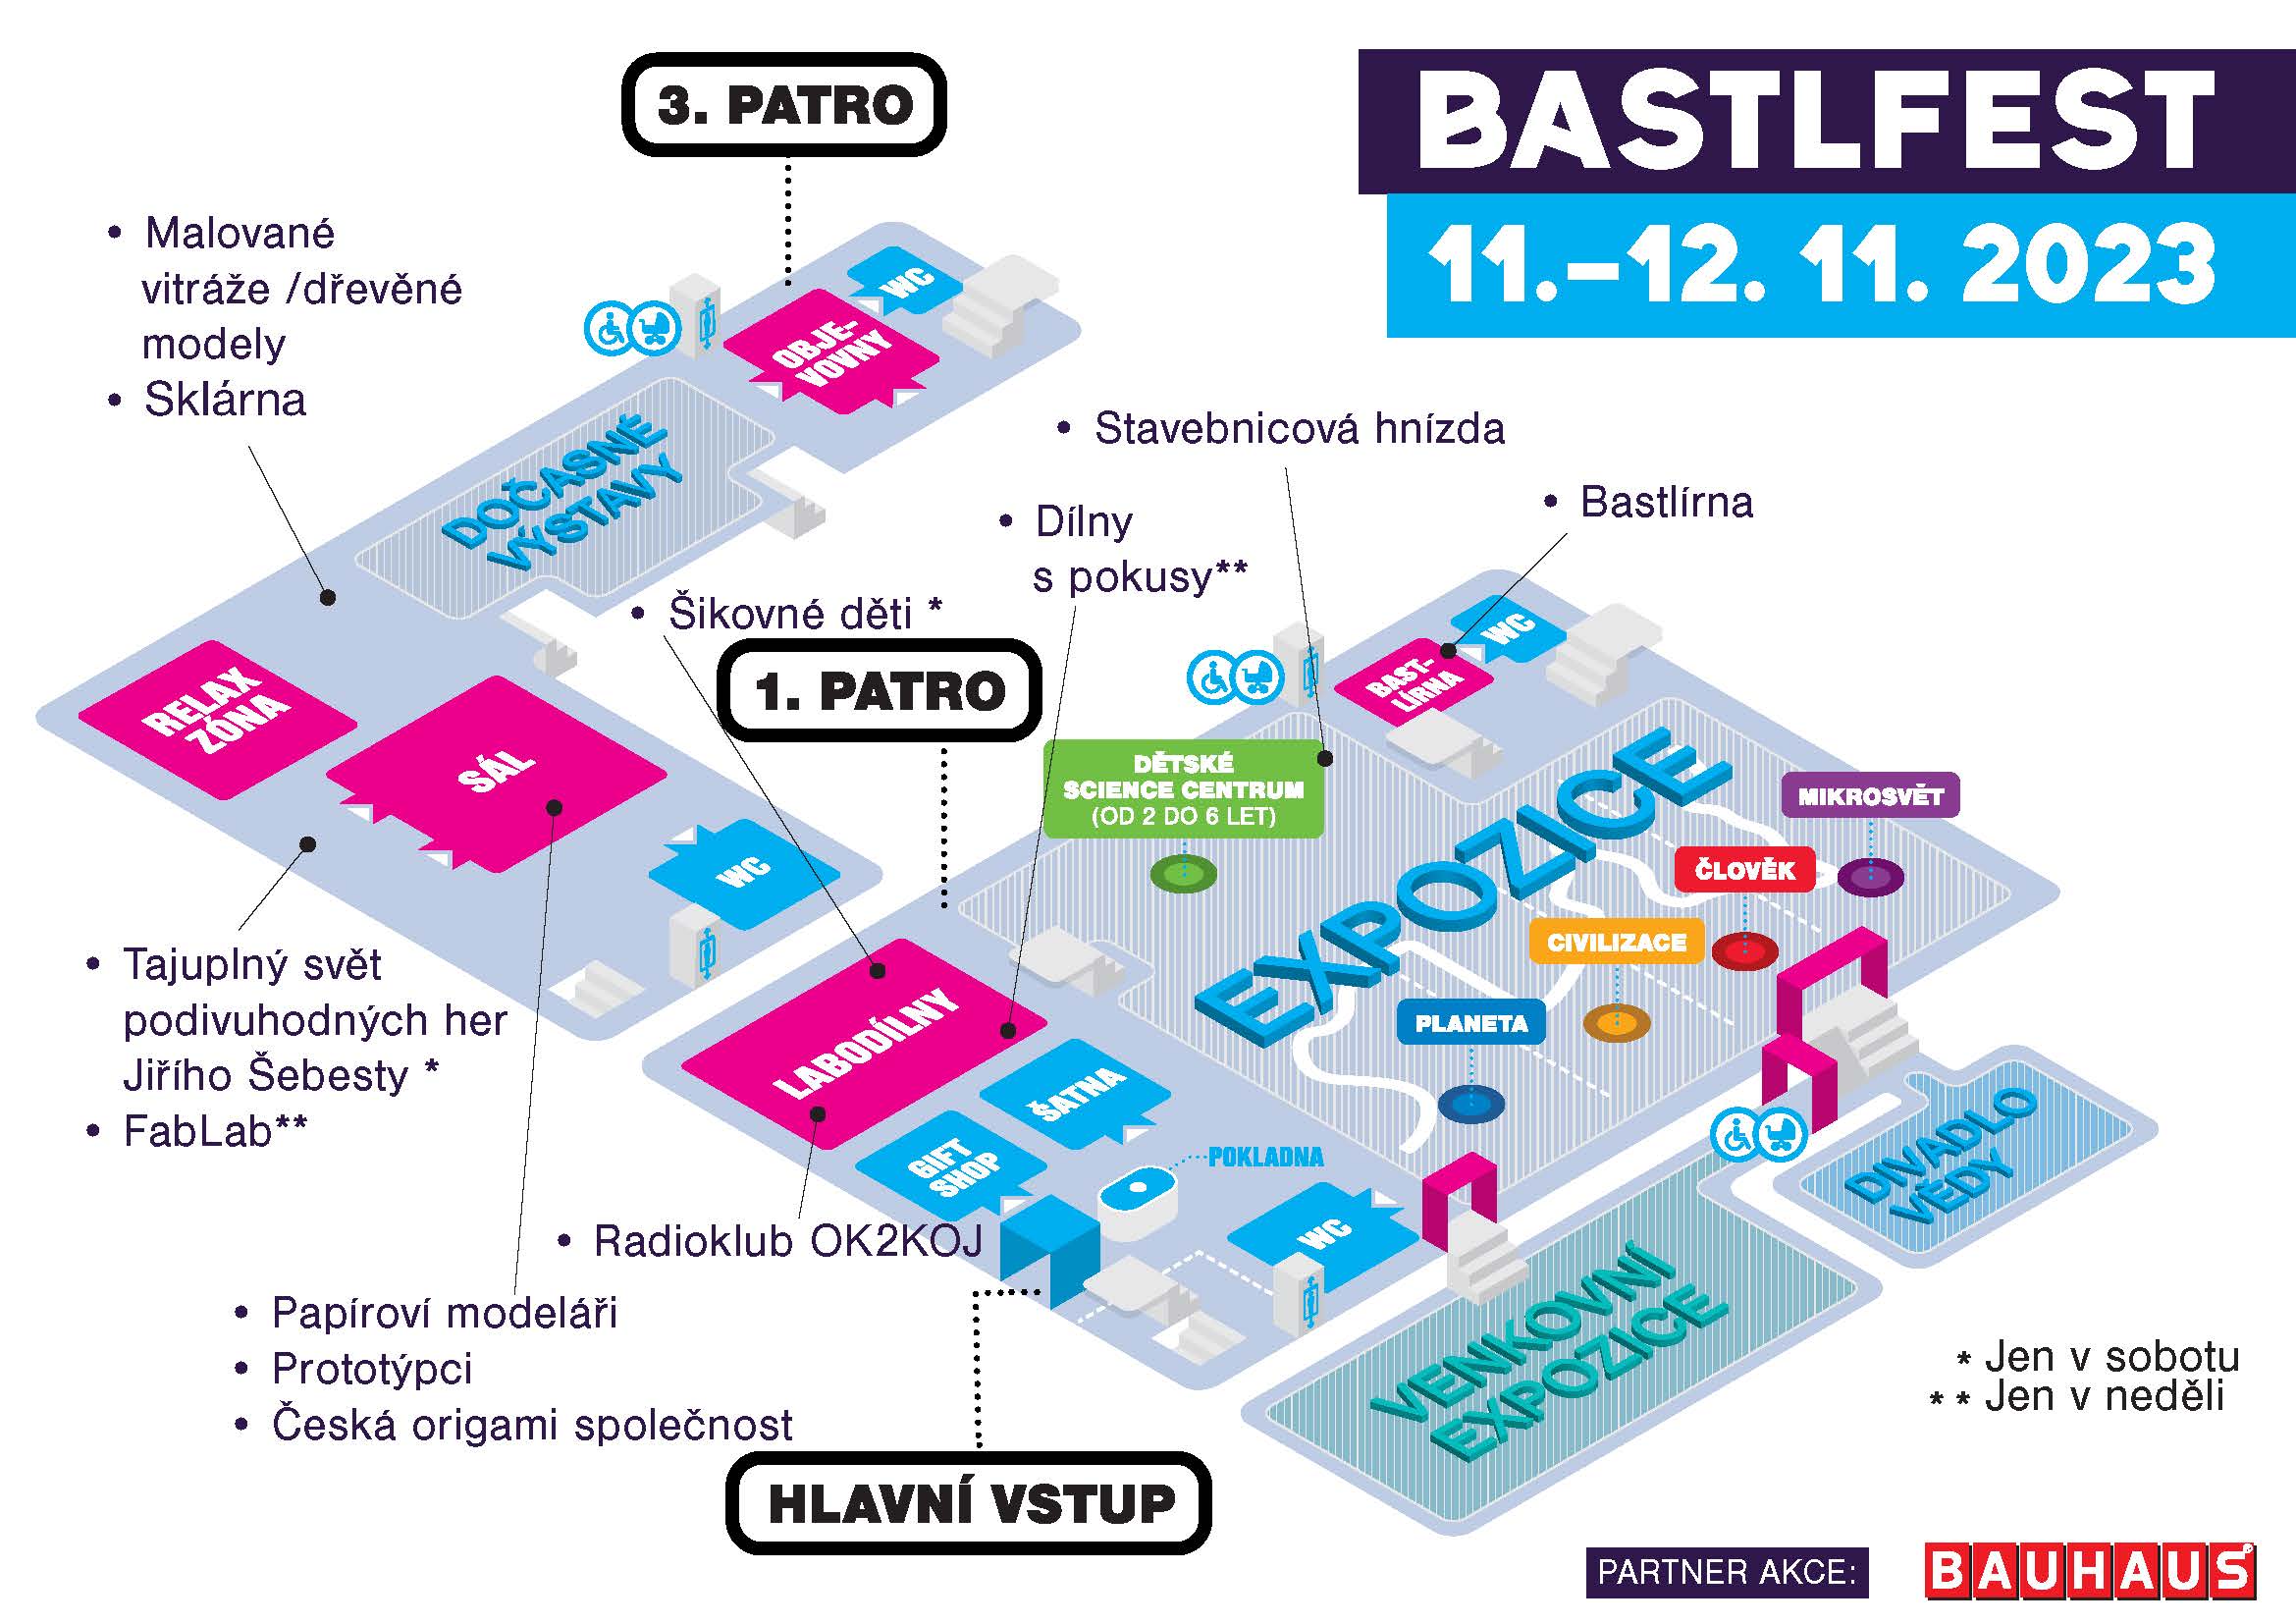 Bastlfest 2023 mapa expozice VIDA!